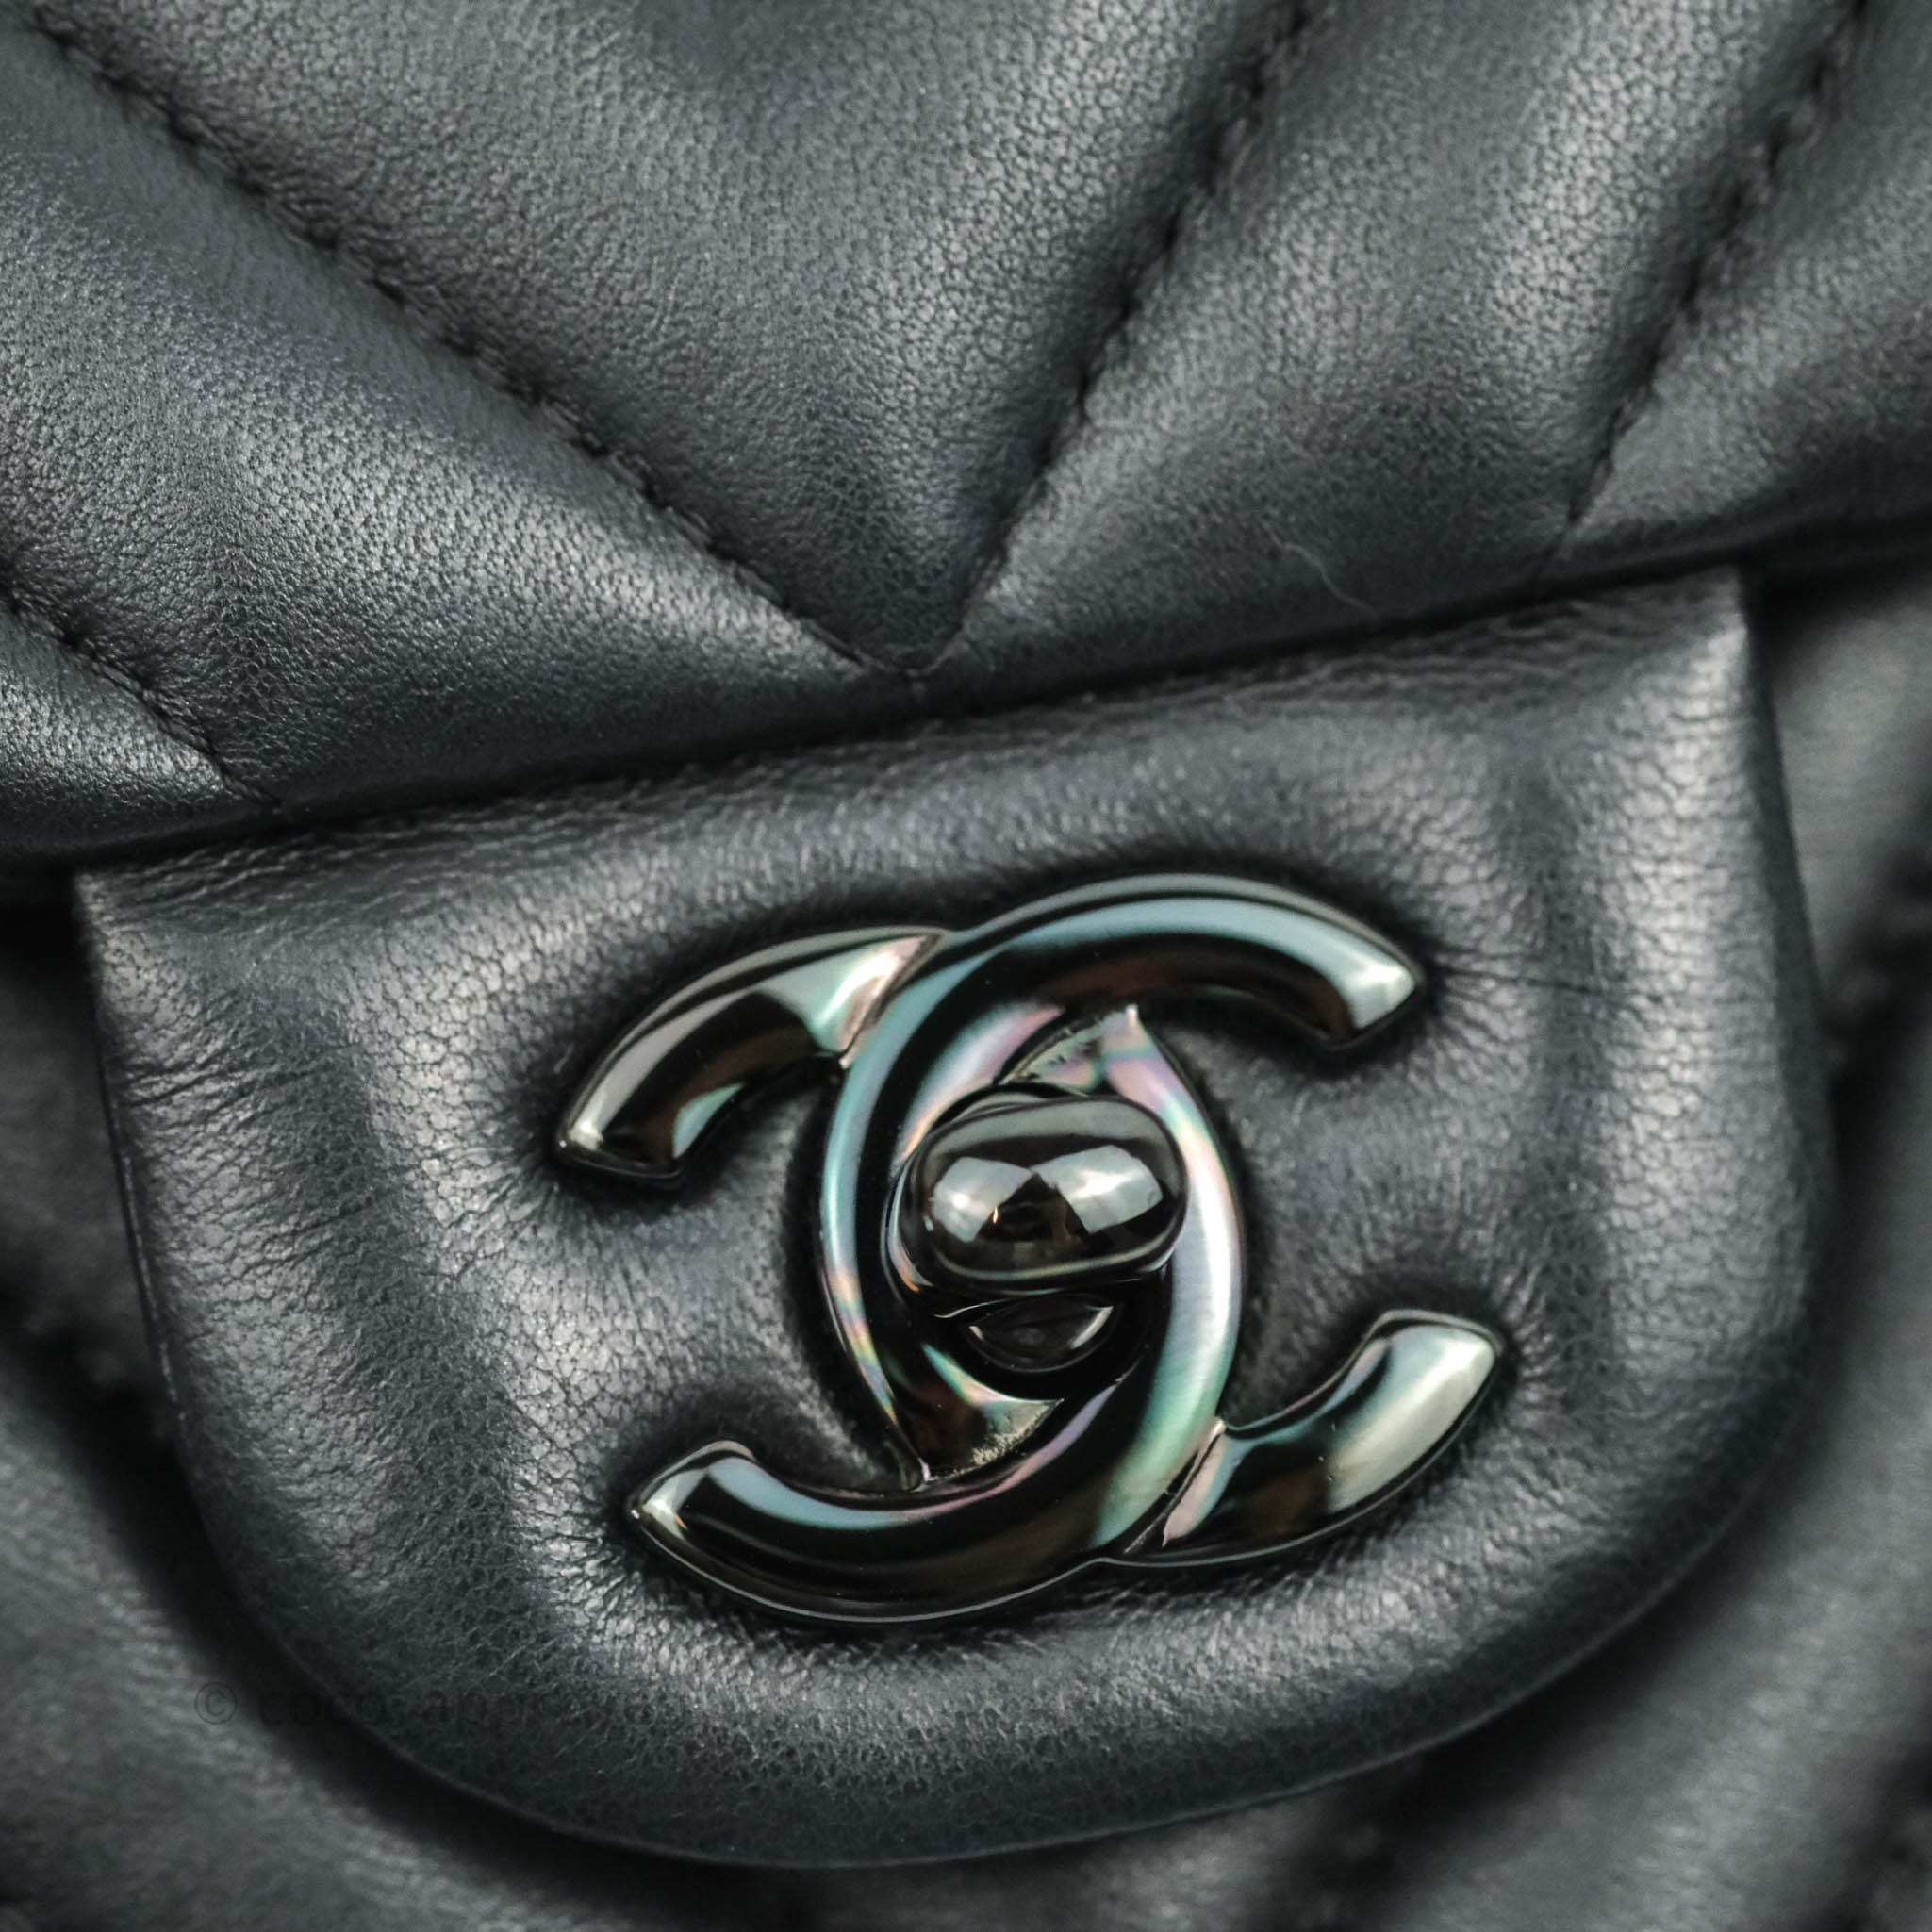 Chanel 15s So Chevron Medium Classic Double Flap Bag